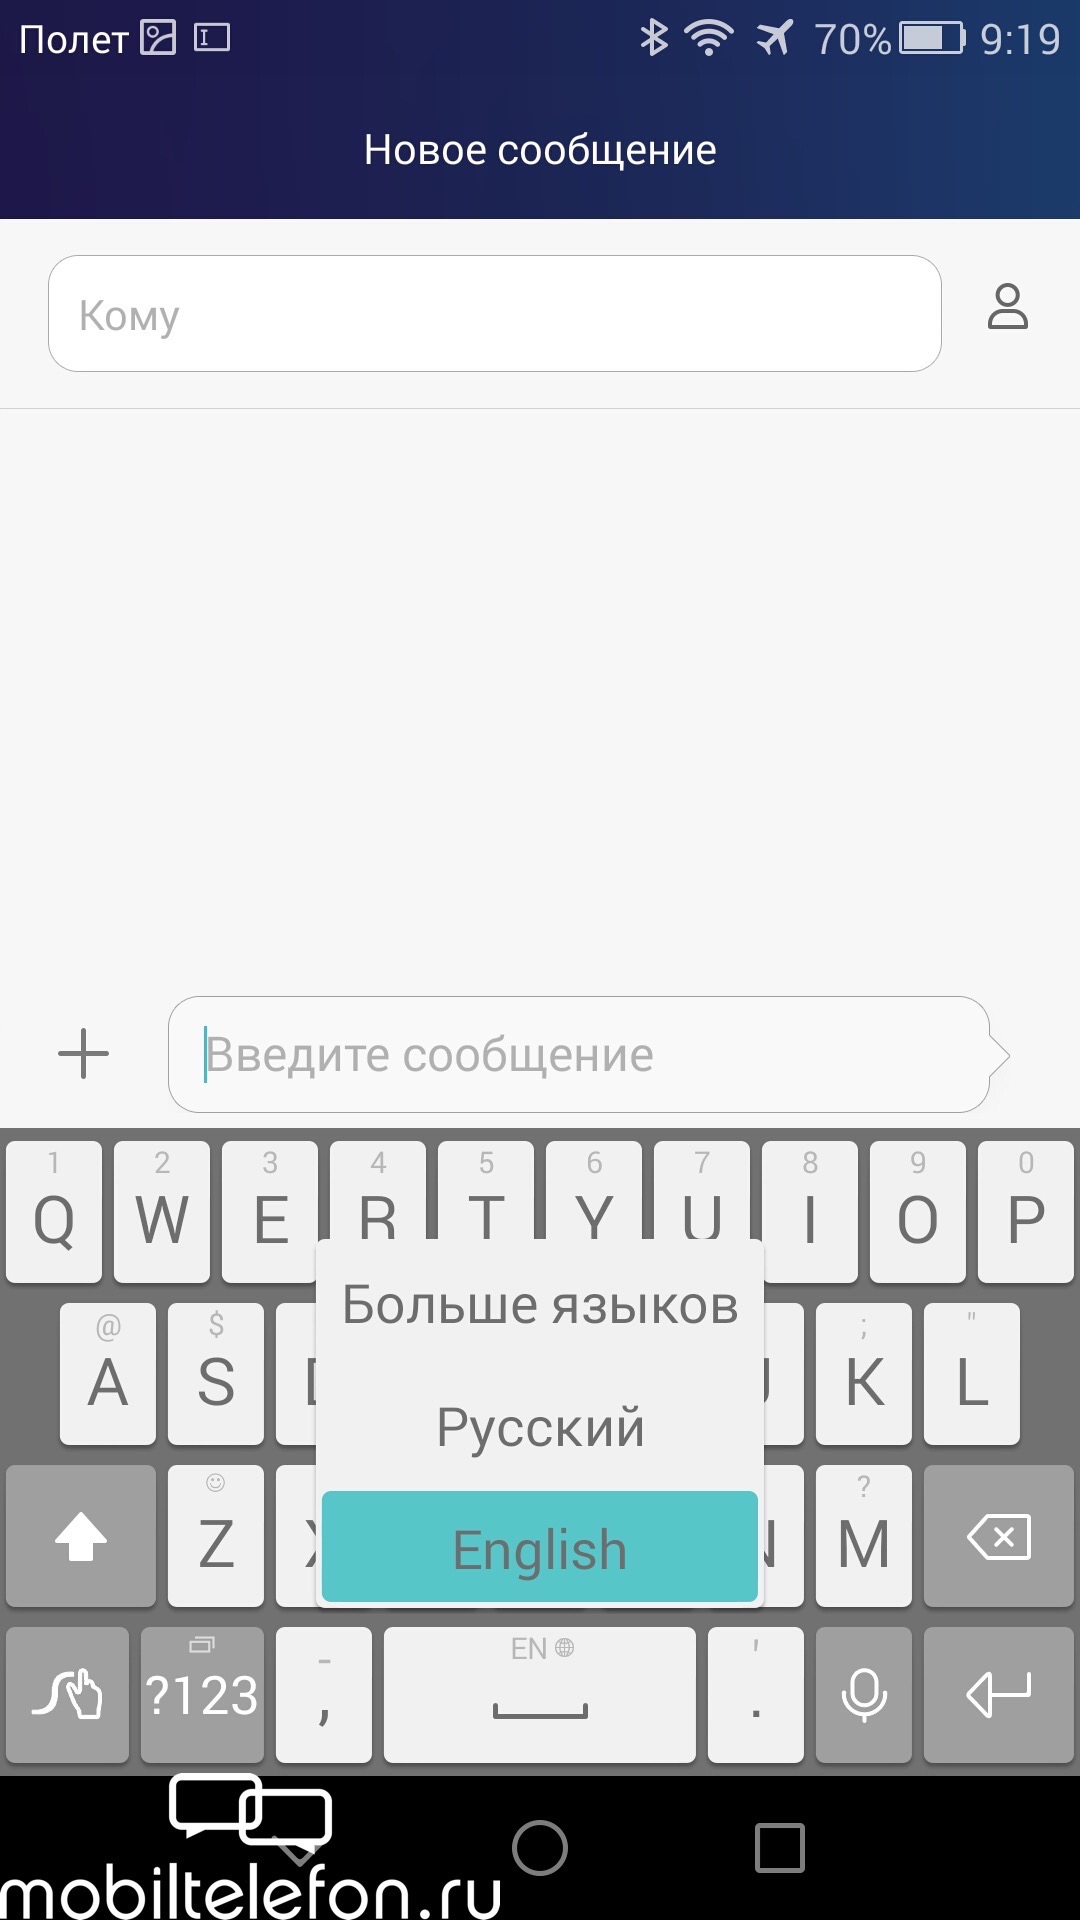 Как поменять язык на русский в телеграмм на андроид фото 63